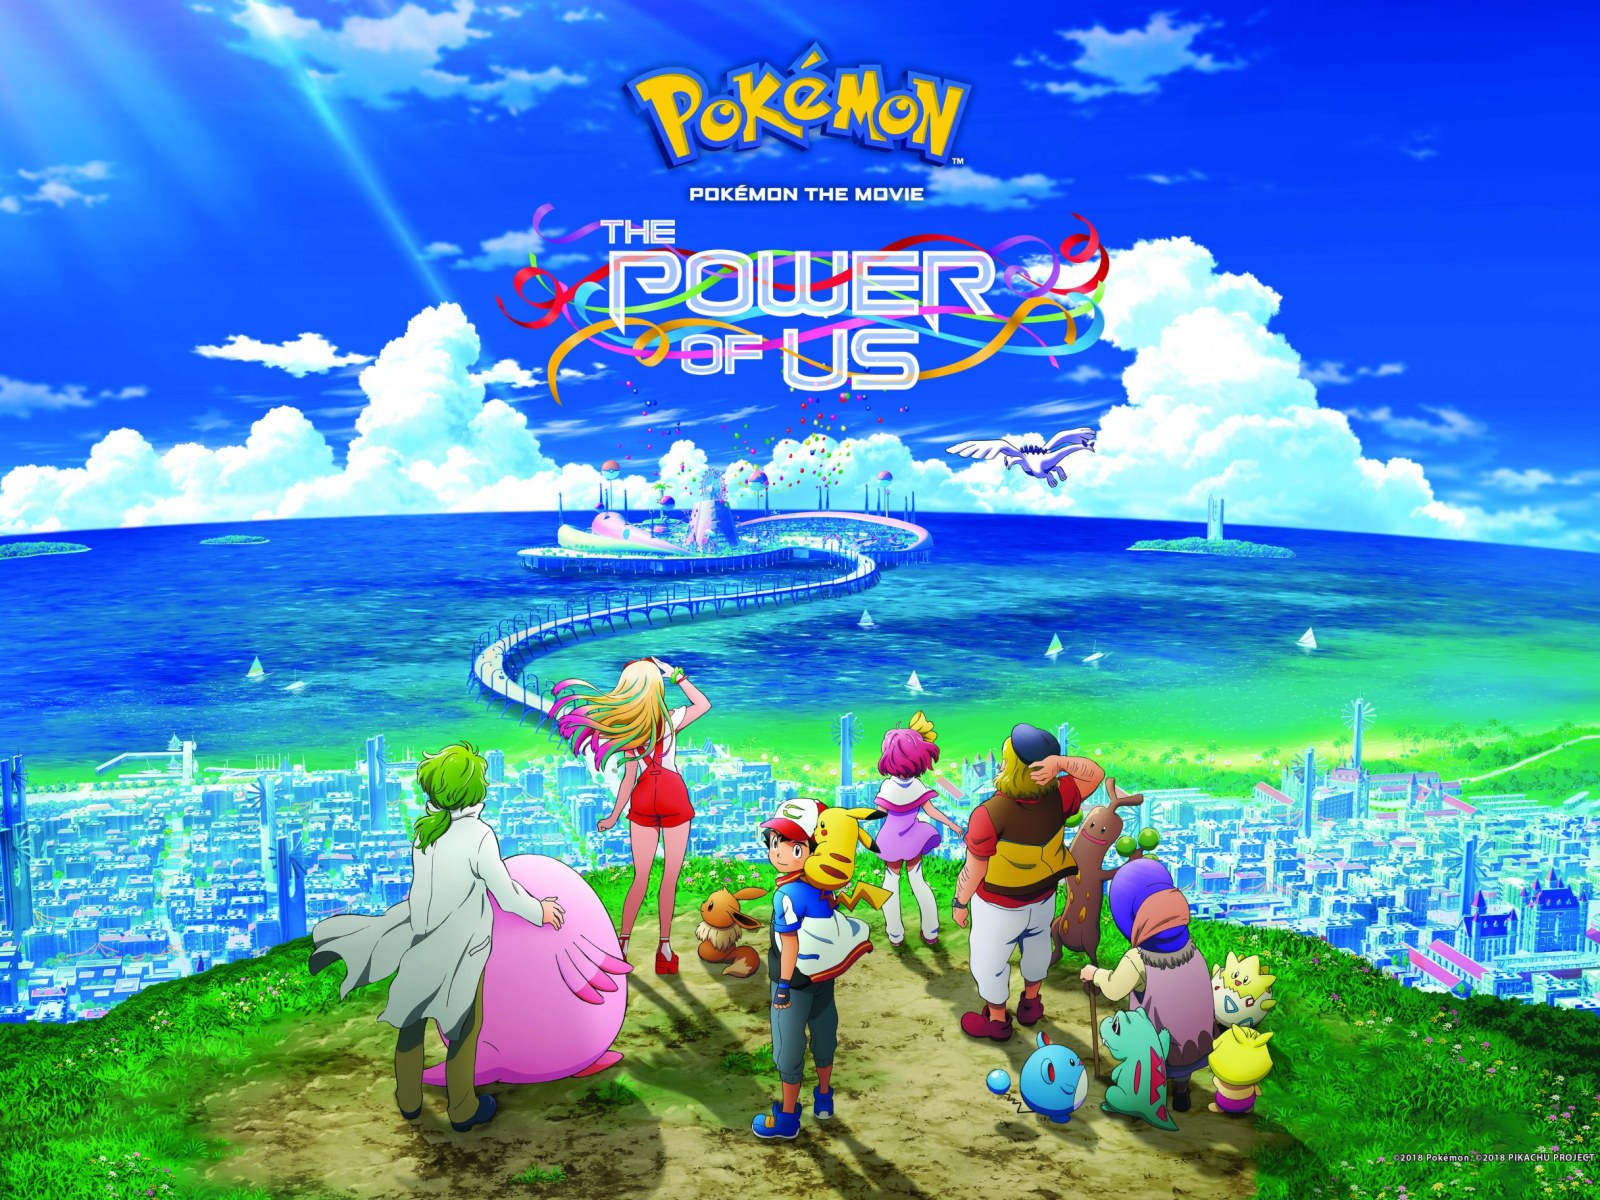 Pokemon The Movie 21 The Power of Us (2018)